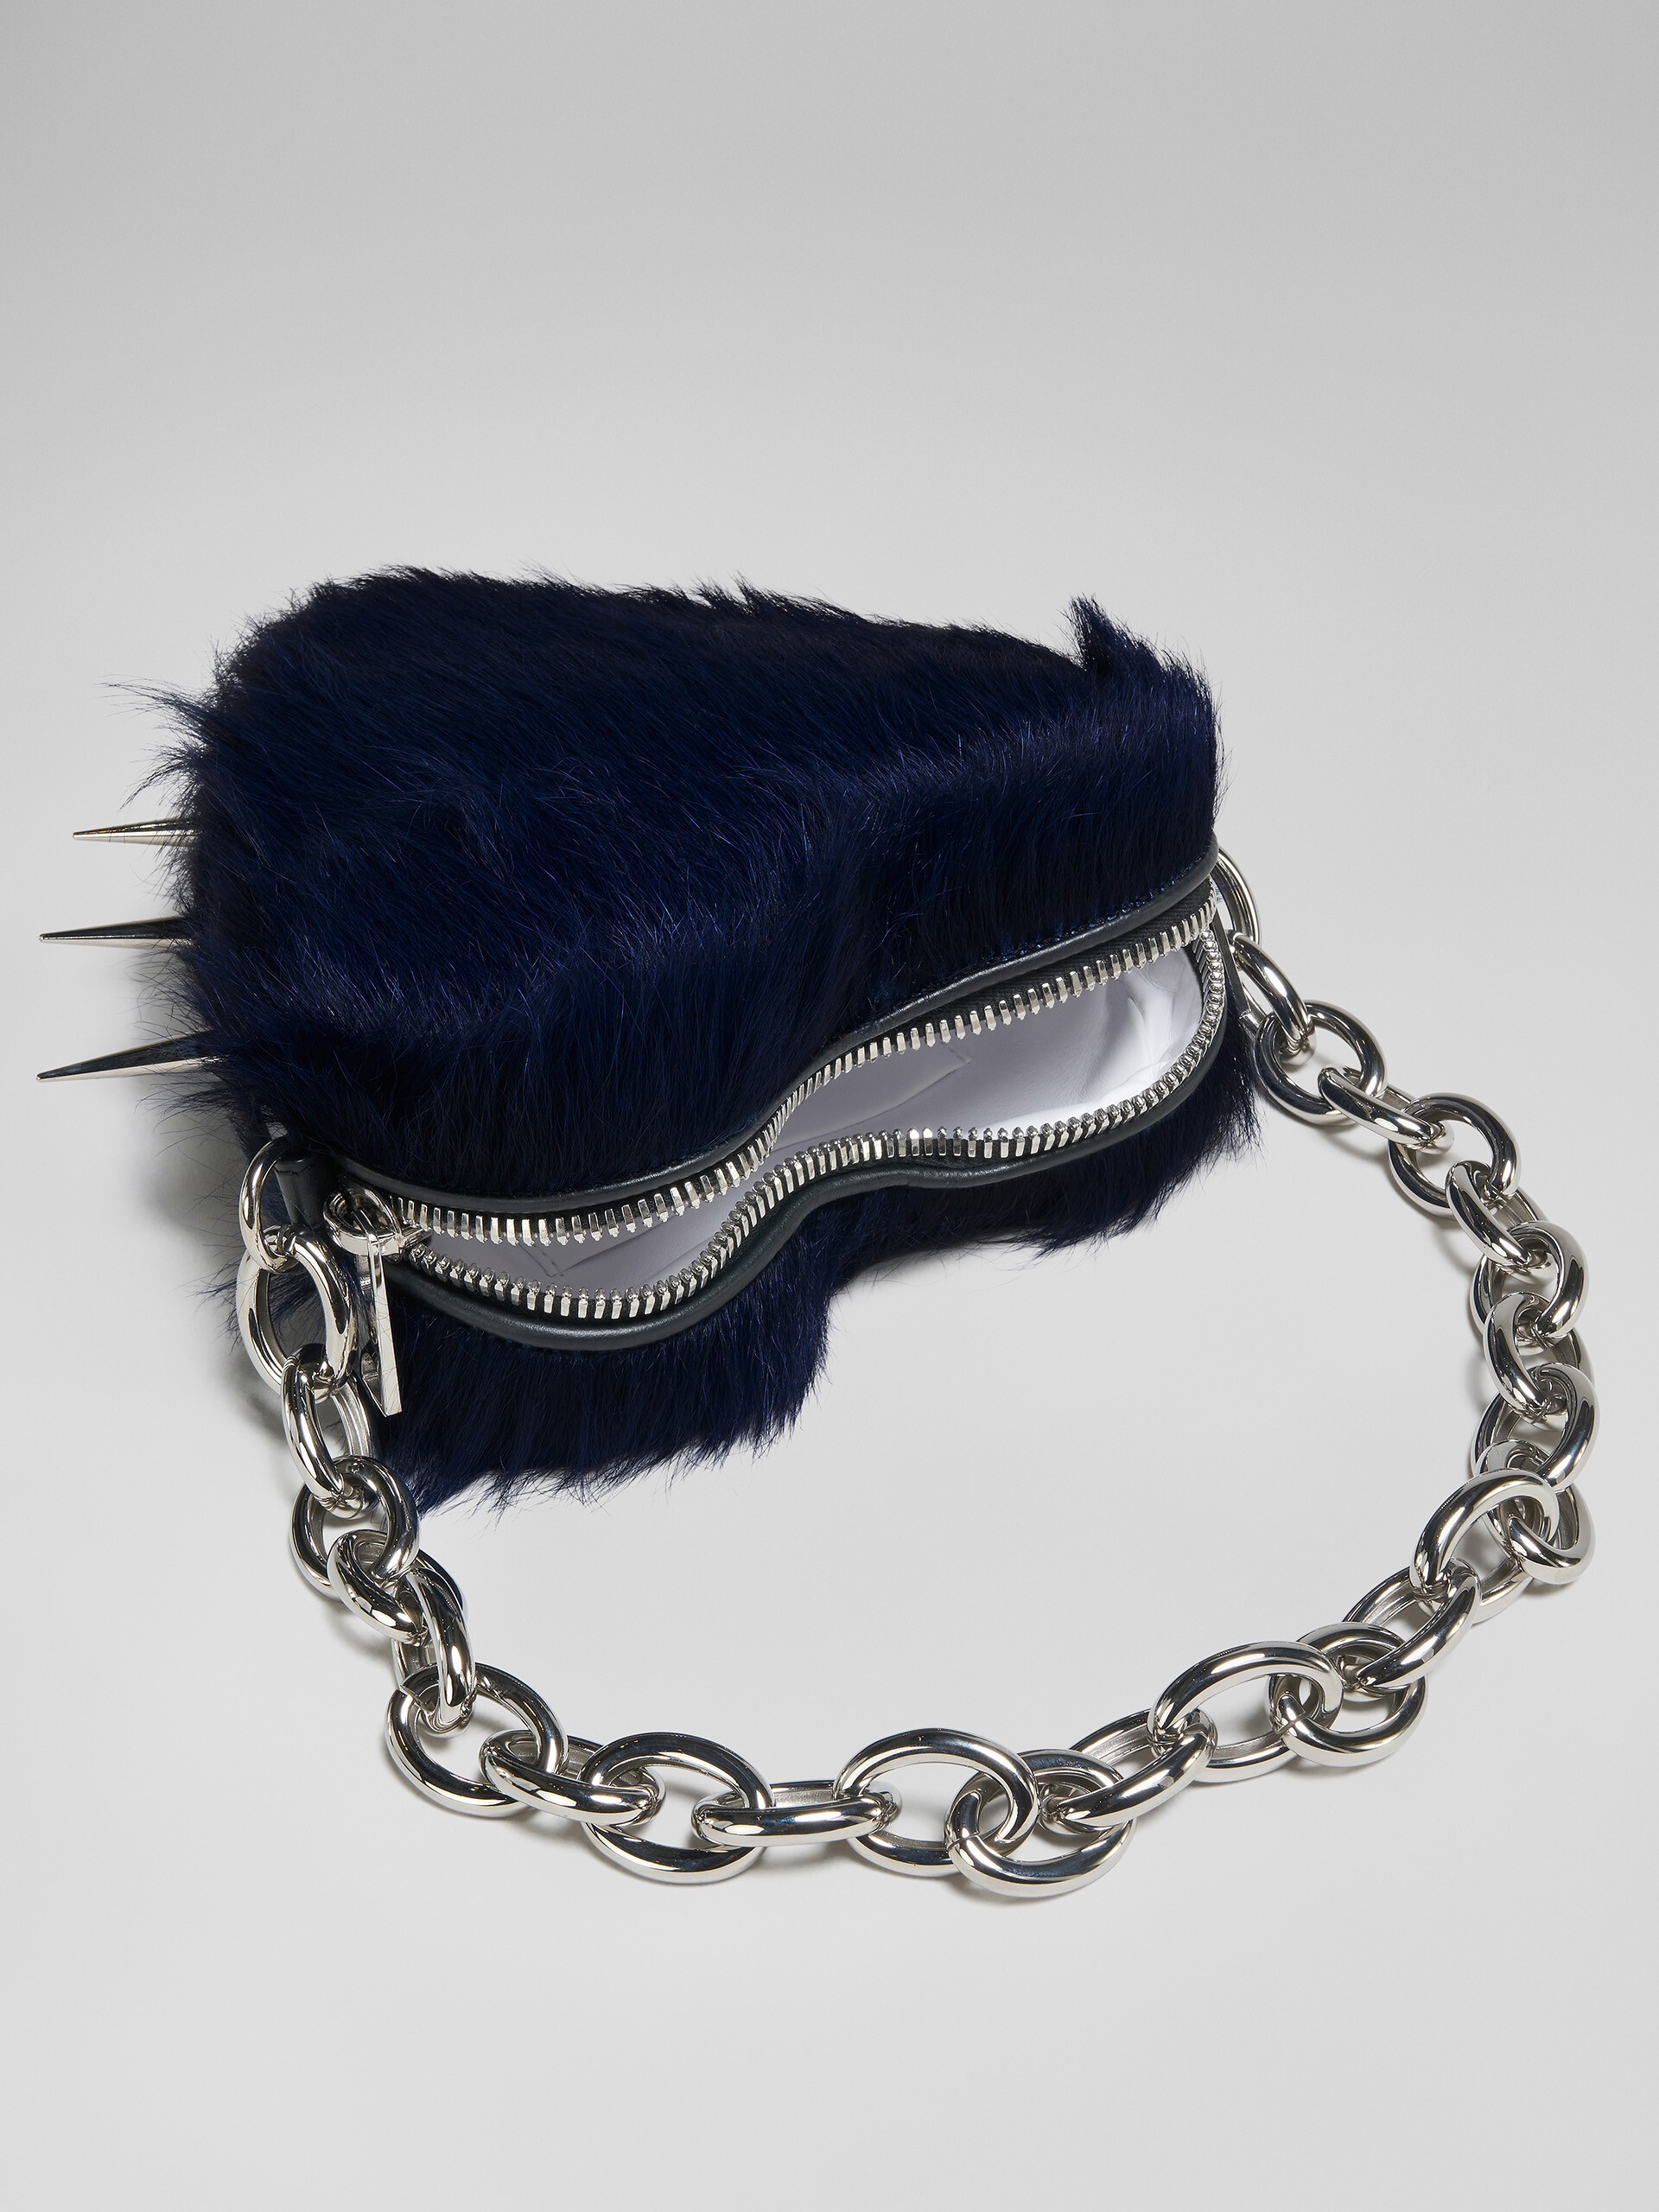 Long hair calfskin Heart handbag - Handbag - Image 4